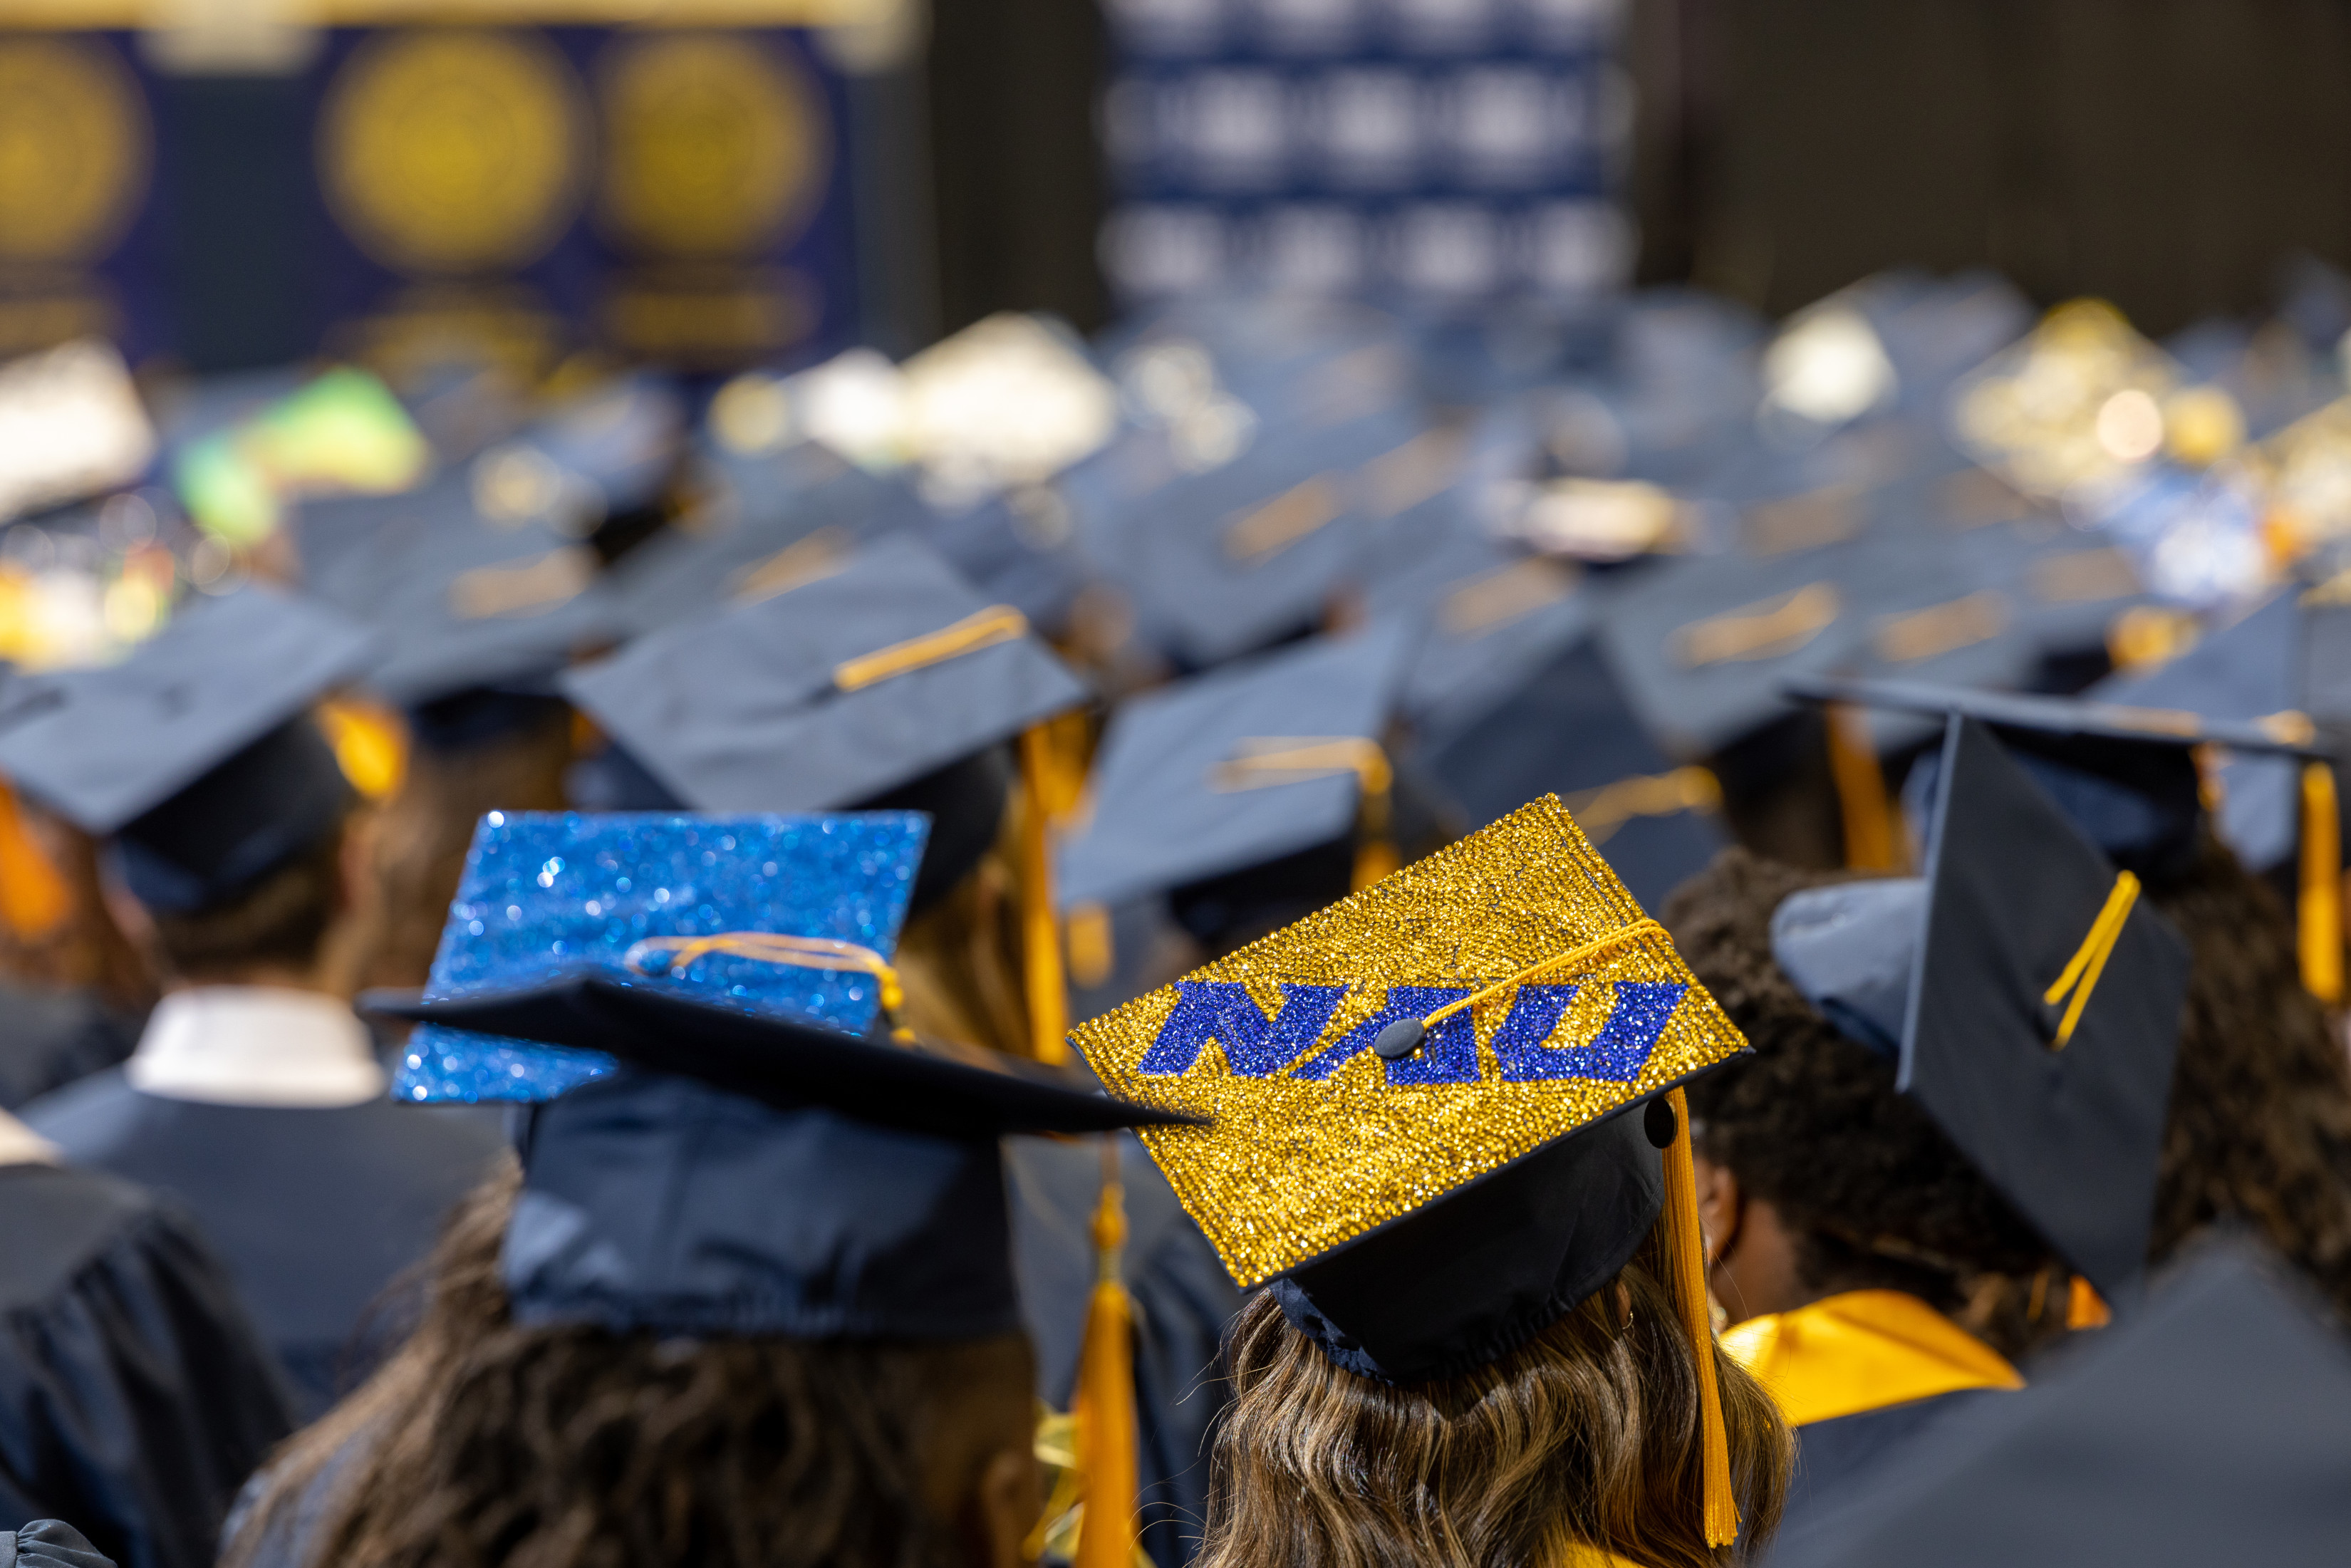 In room full of graduation caps, a sparkling NAU logo graduation cap shines.